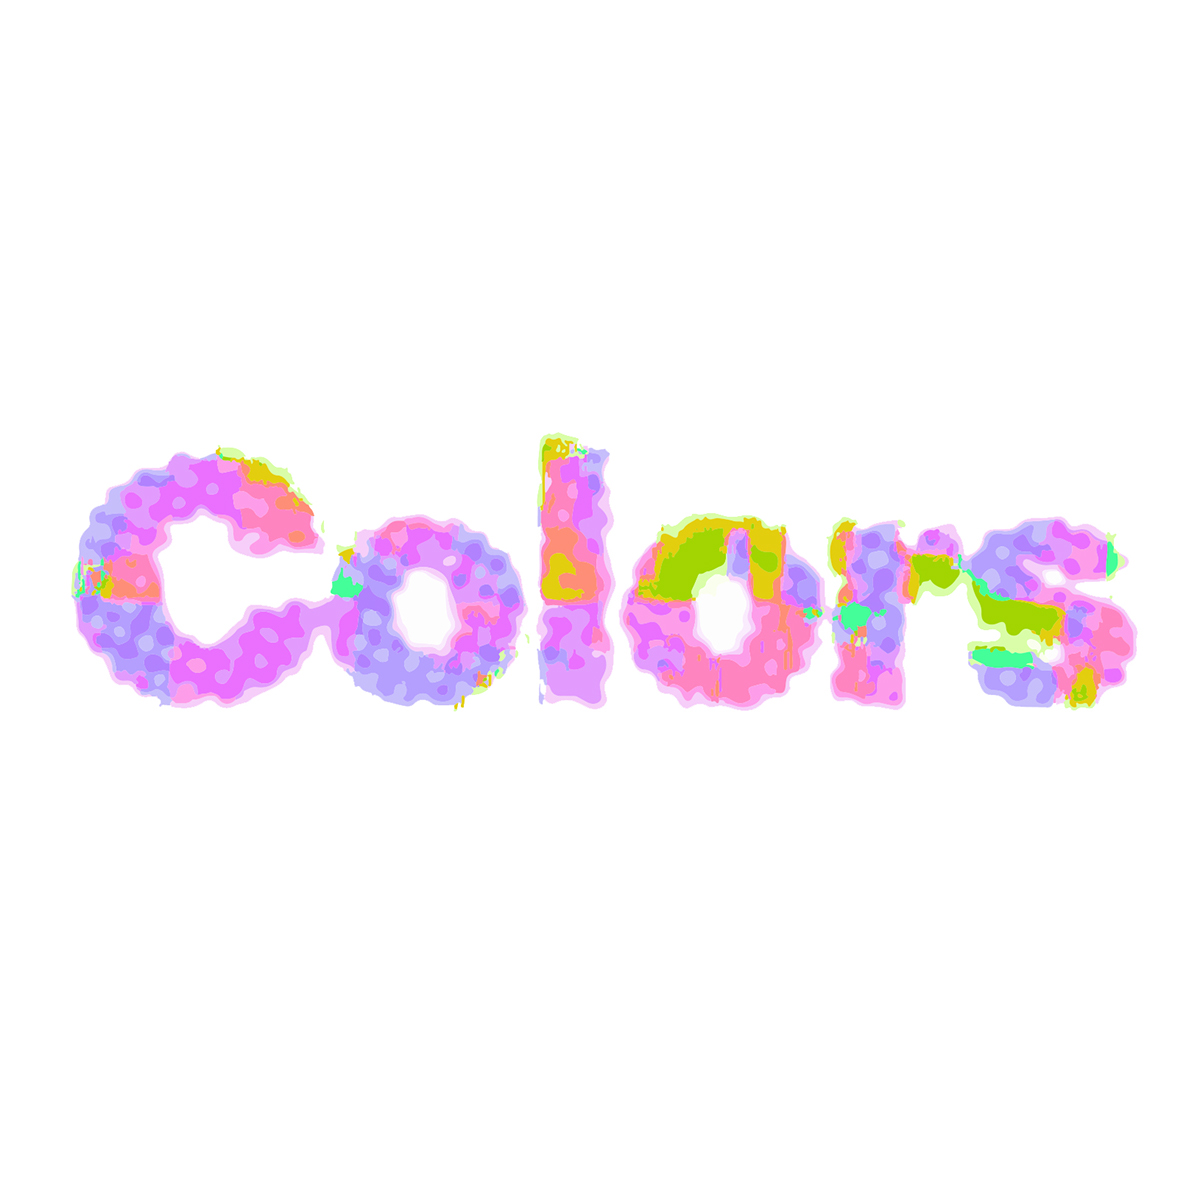 Adobe Portfolio design logo type digital paint